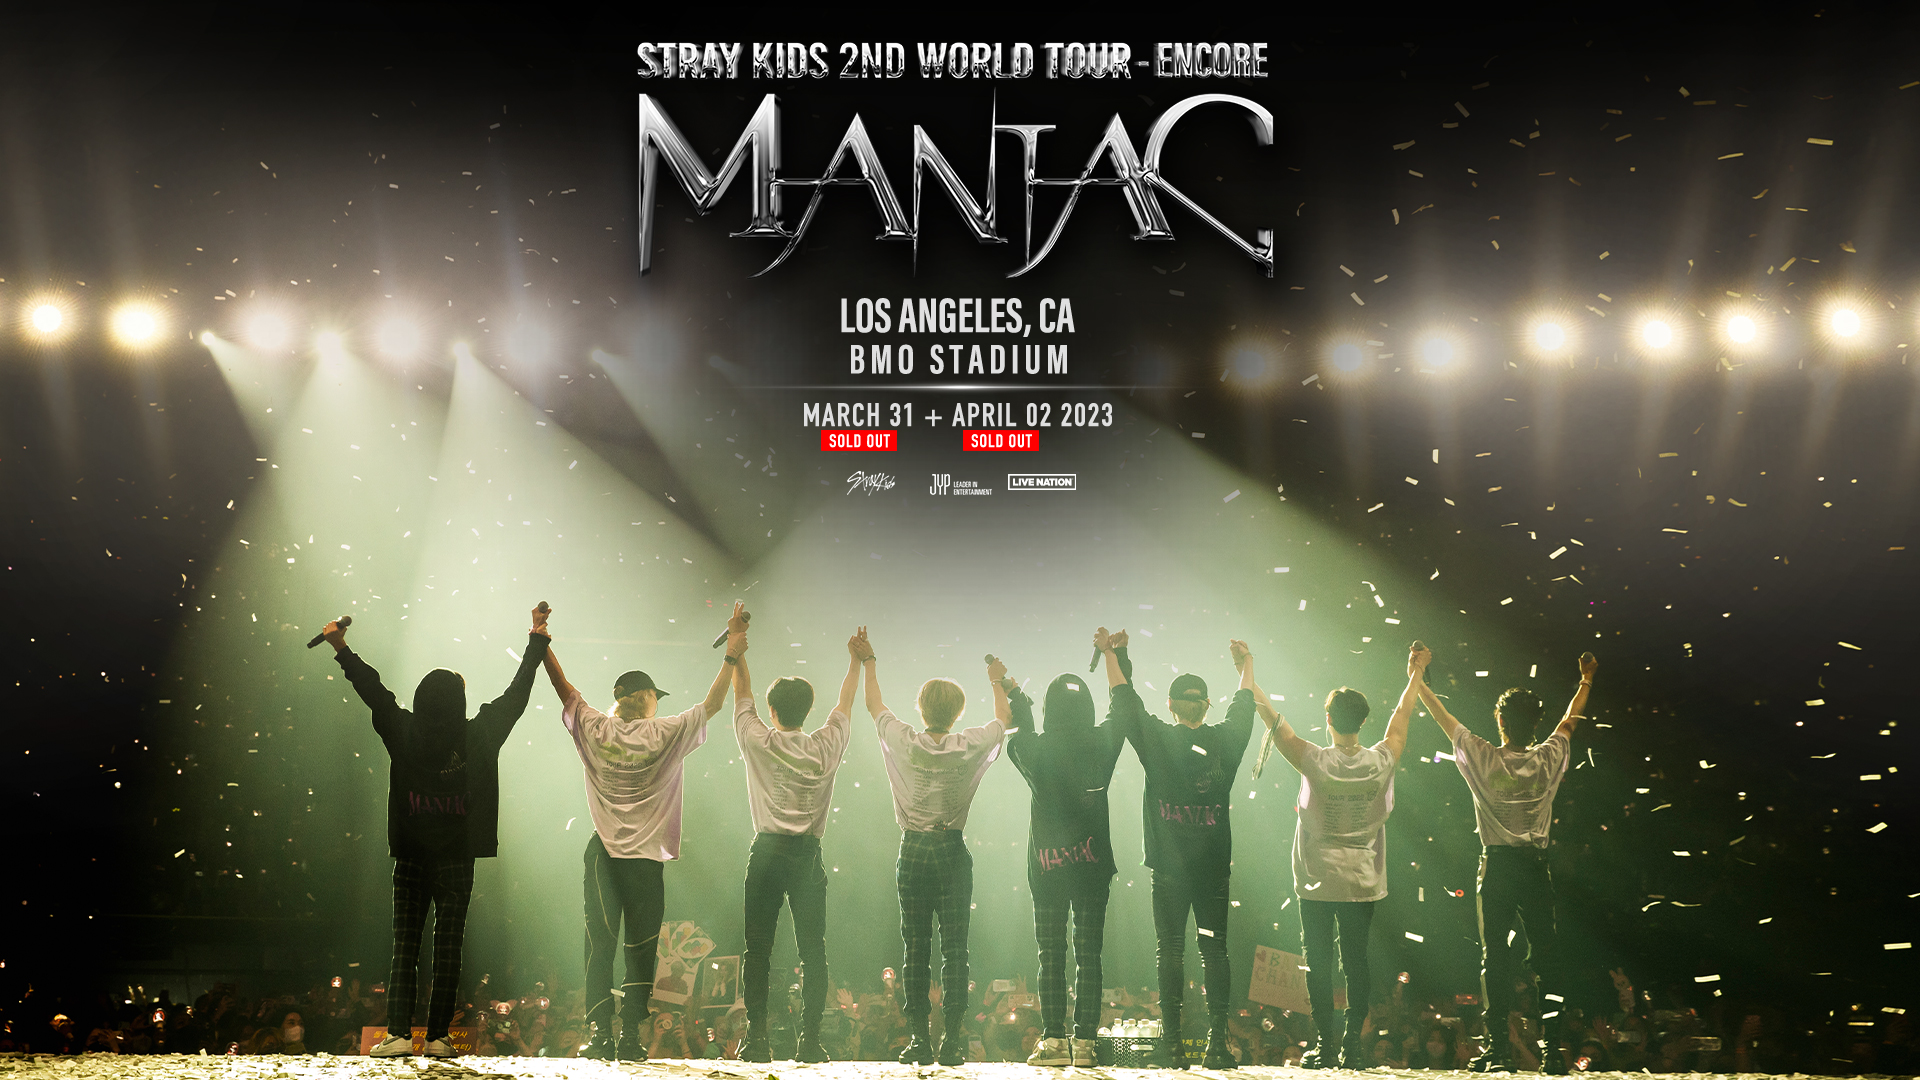 Stray Kids 2nd World Tour “MANIAC” Encore